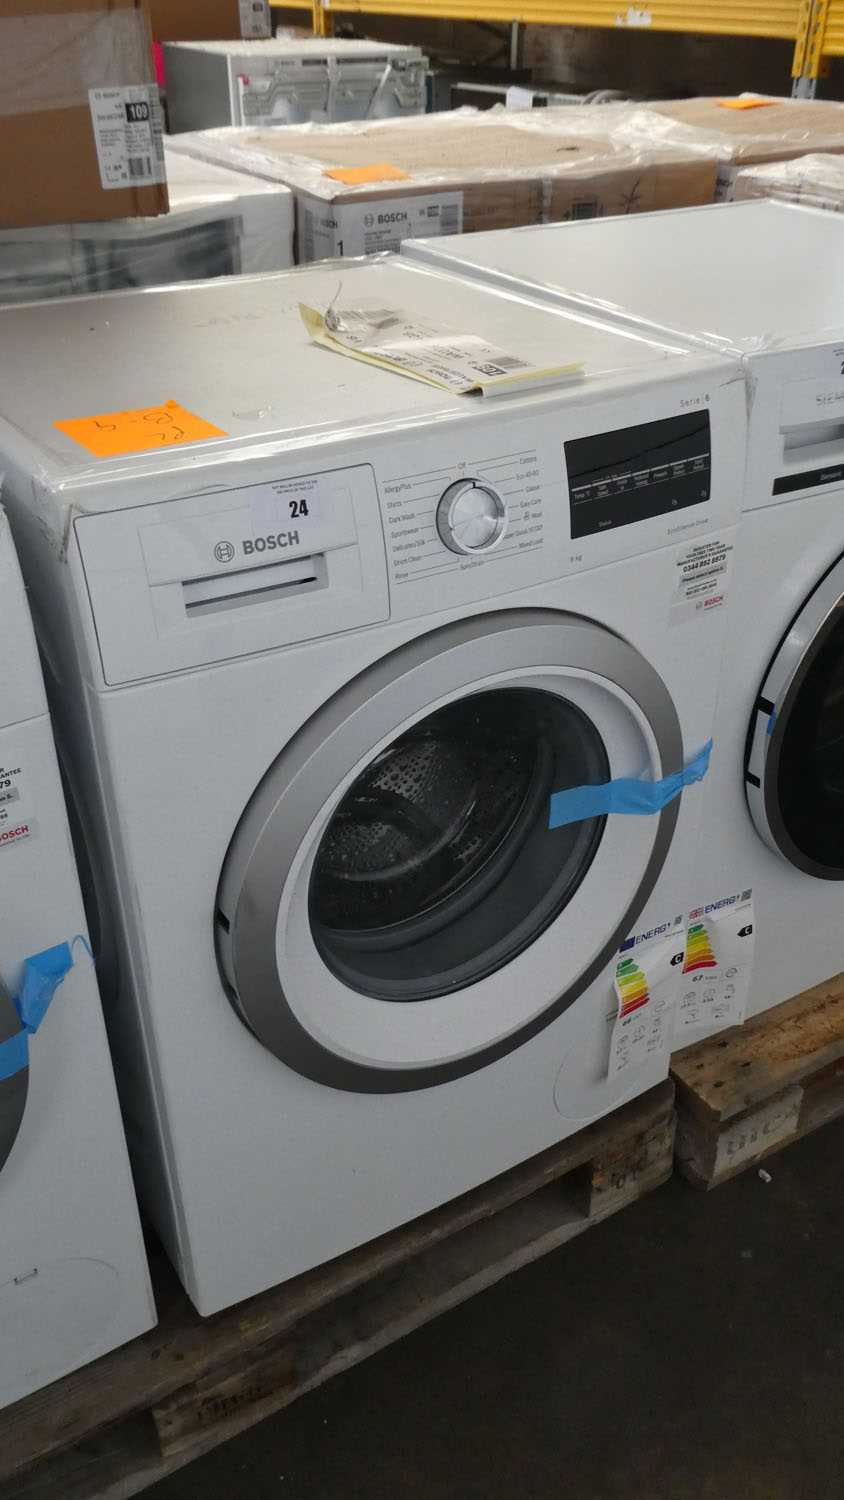 Lot 24 - WAU28T64GBB Bosch Washing machine